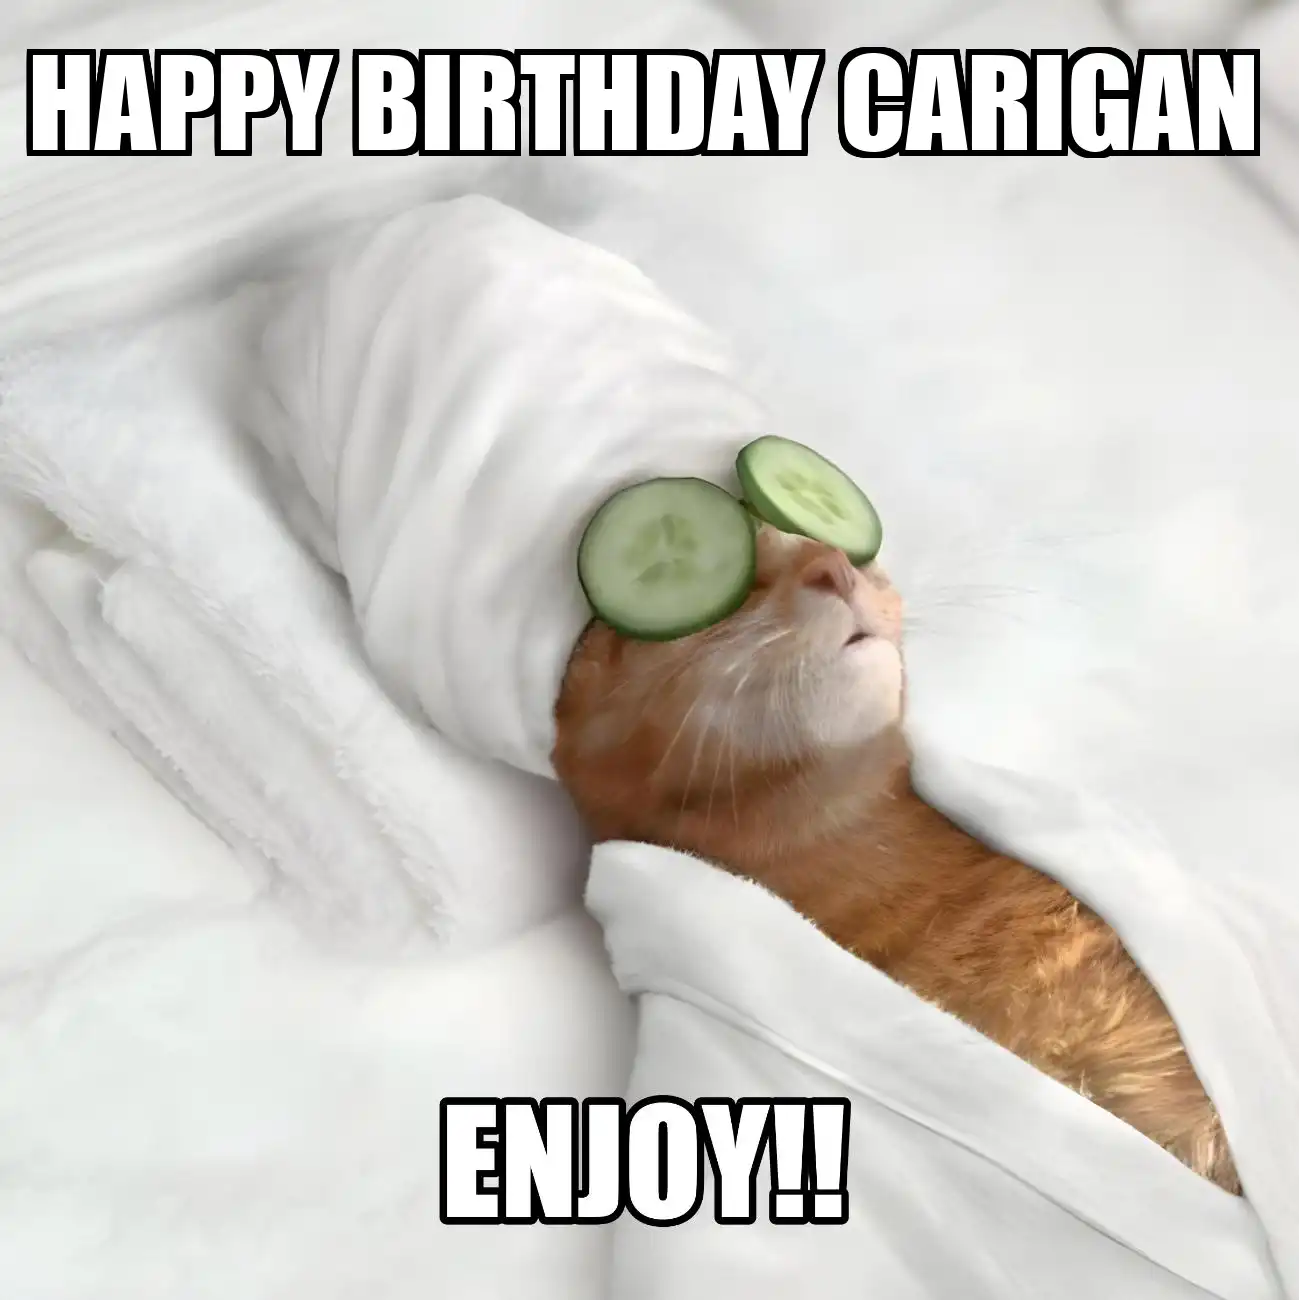 Happy Birthday Carigan Enjoy Cat Meme